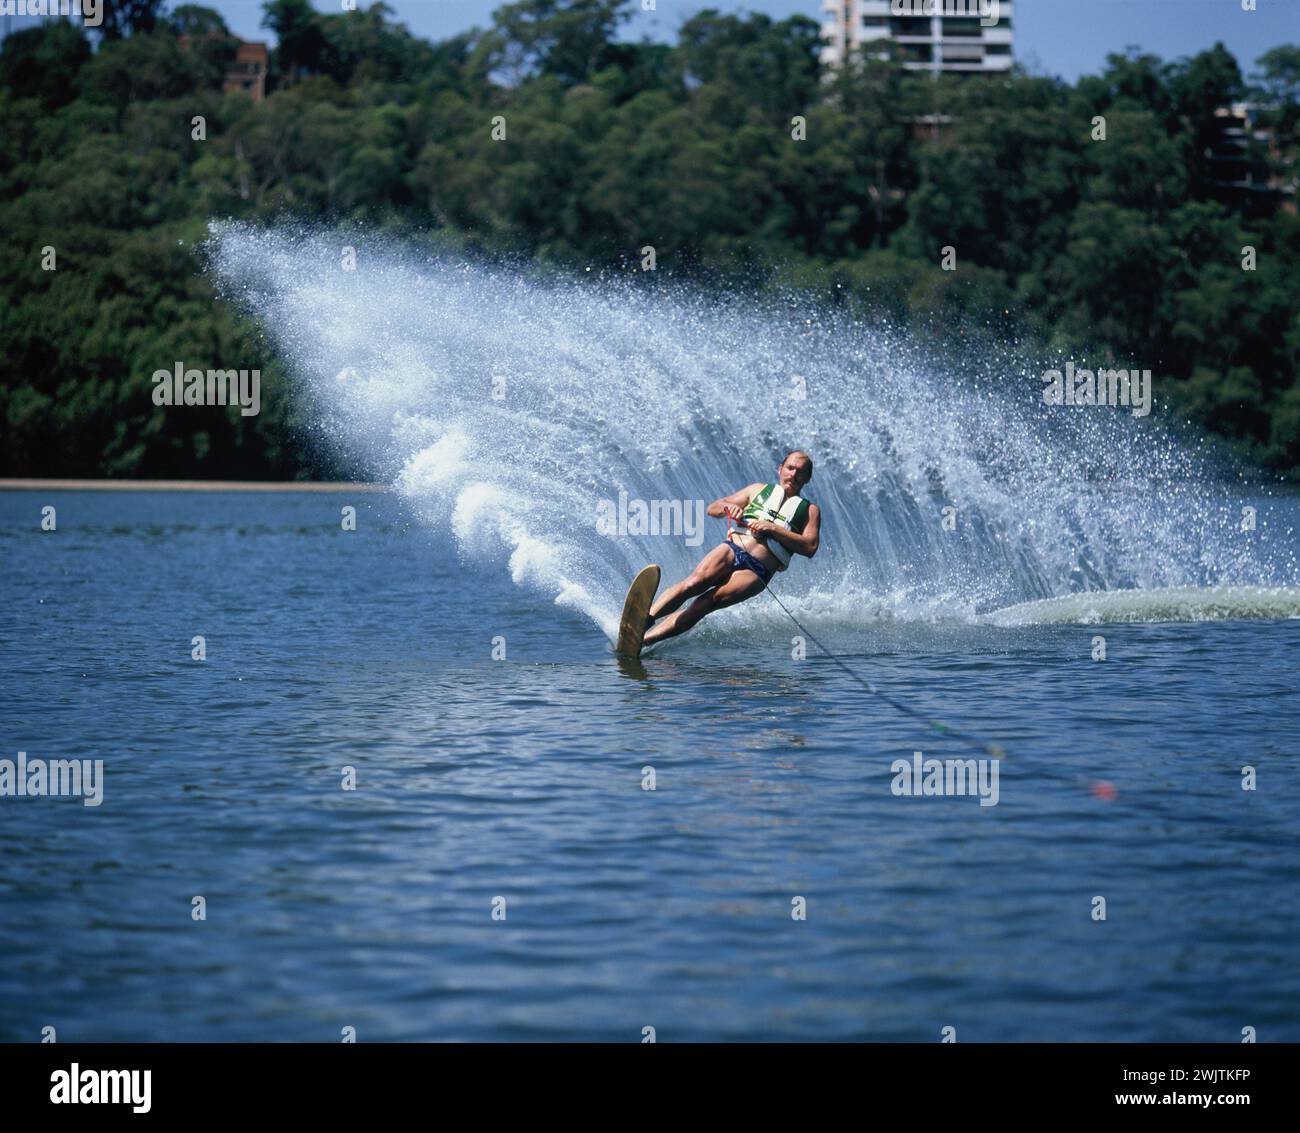 Australia. Sydney. Lane Cove River. Water skiing man. Stock Photo